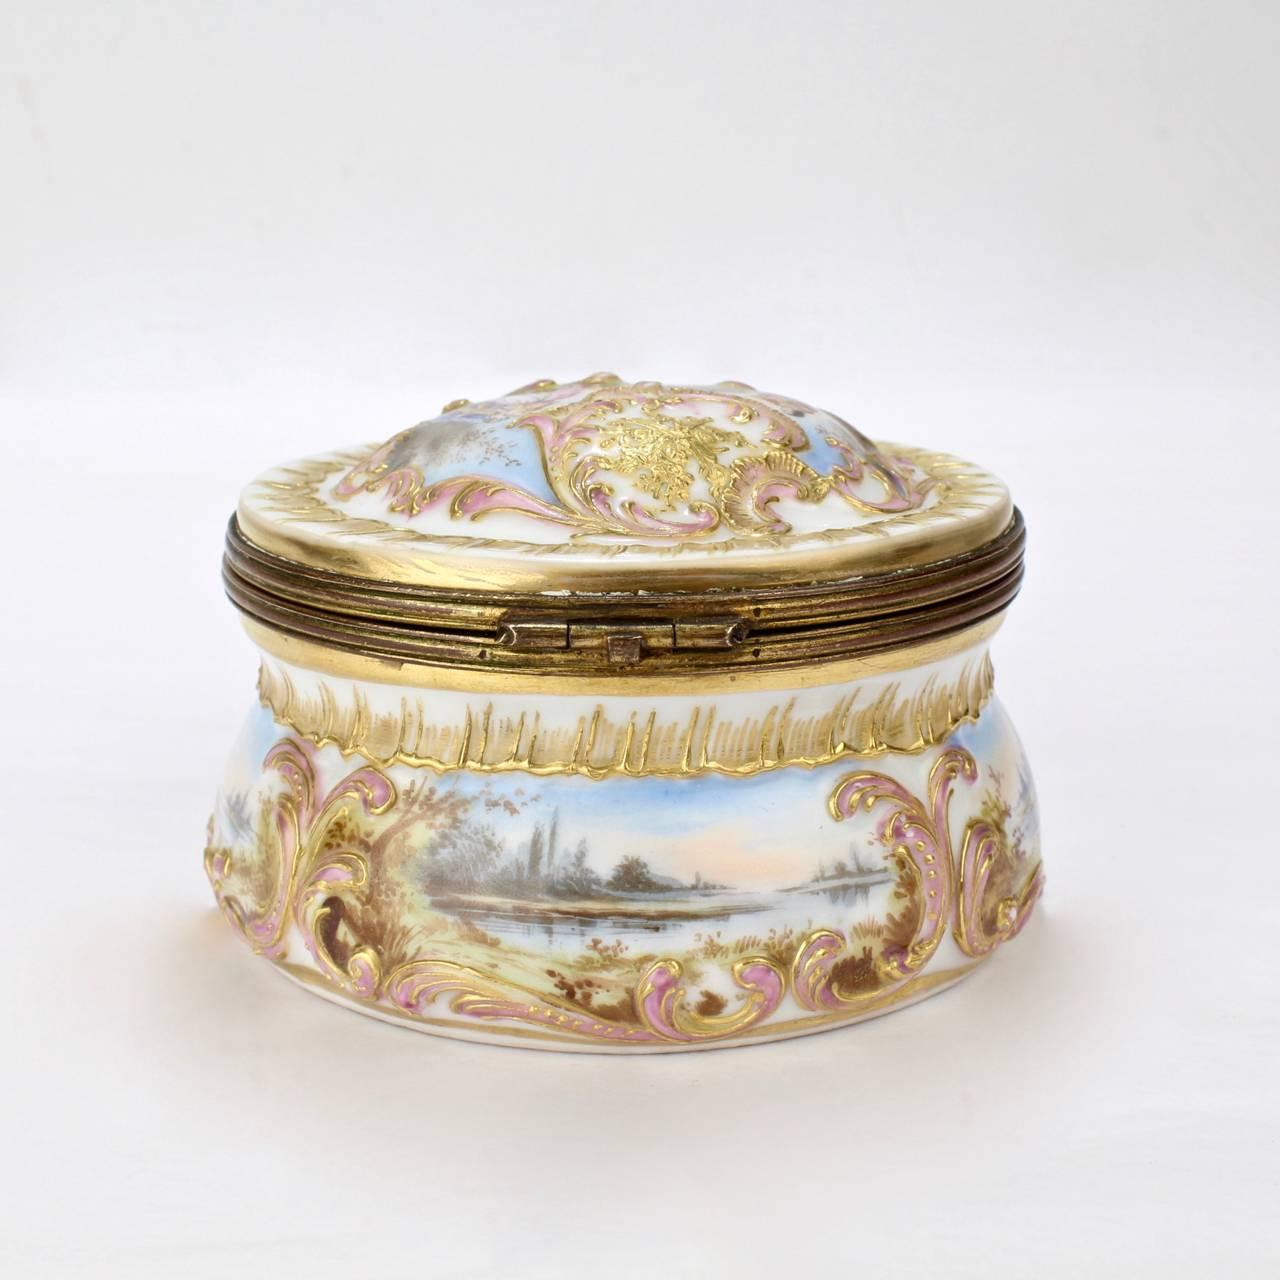 French Antique Gilt Paris Porcelain Table Snuff Box or Round Casket by Bloch & Bourdois For Sale